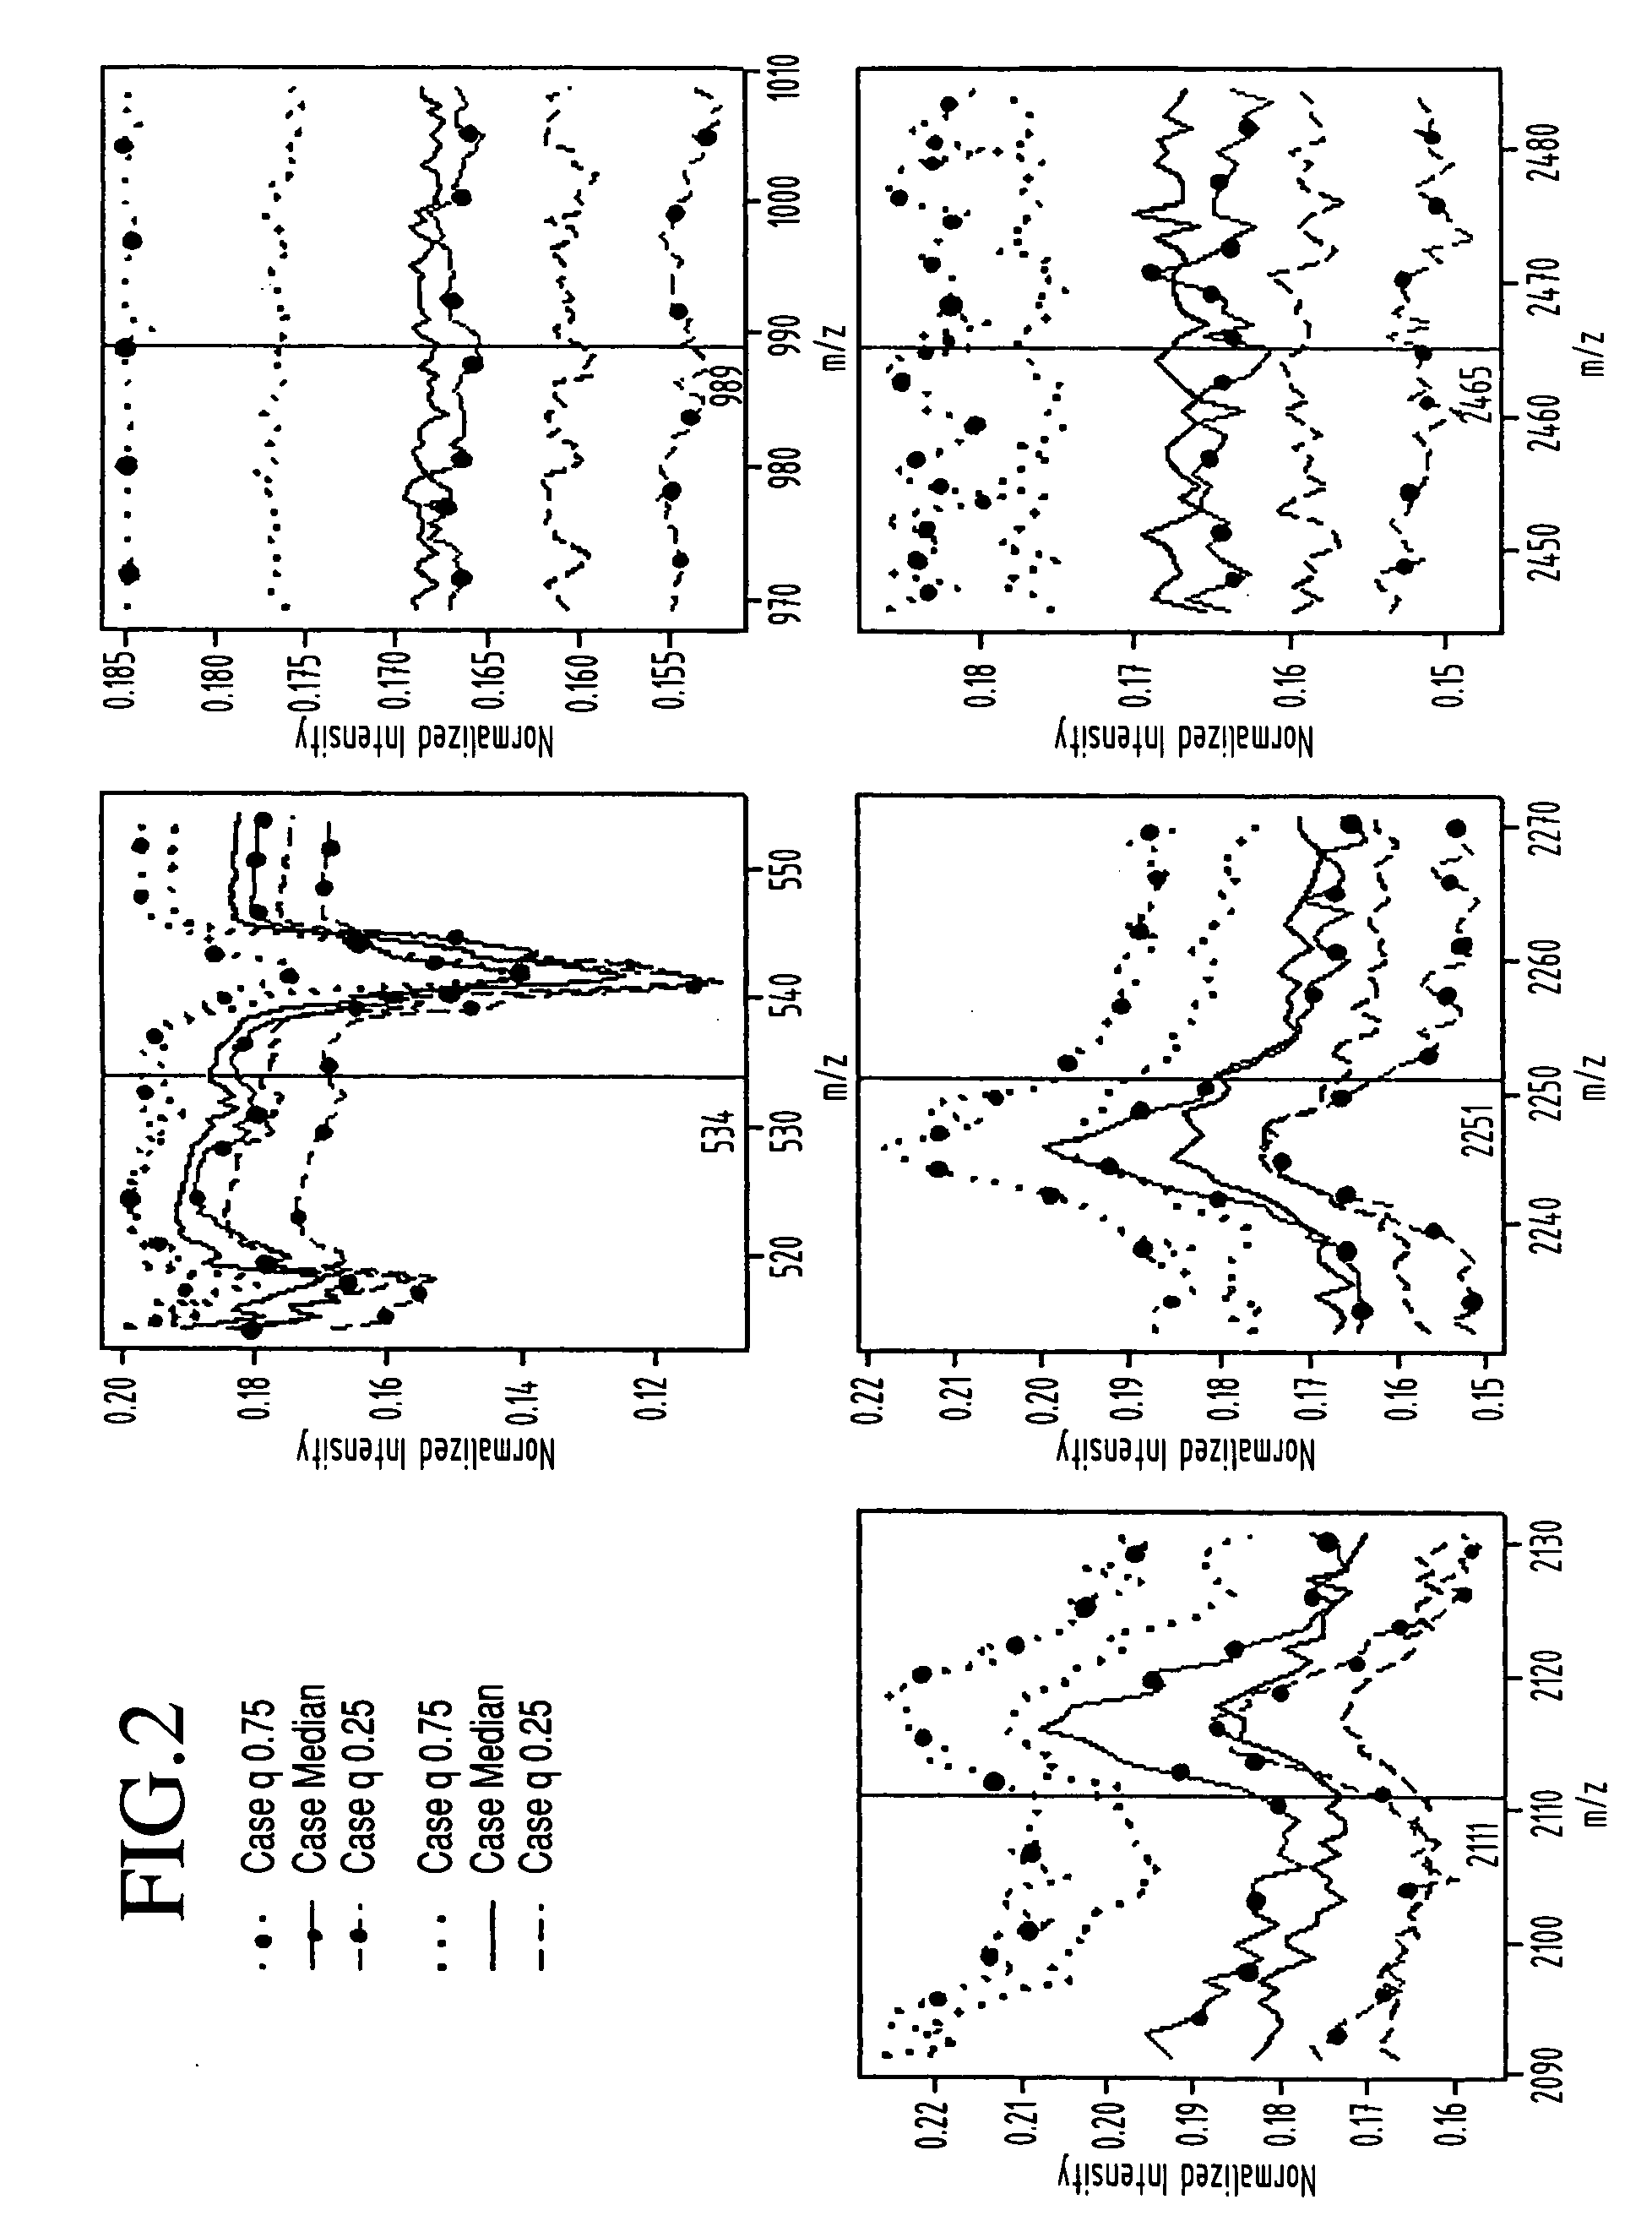 Classification of disease states using mass spectrometry data